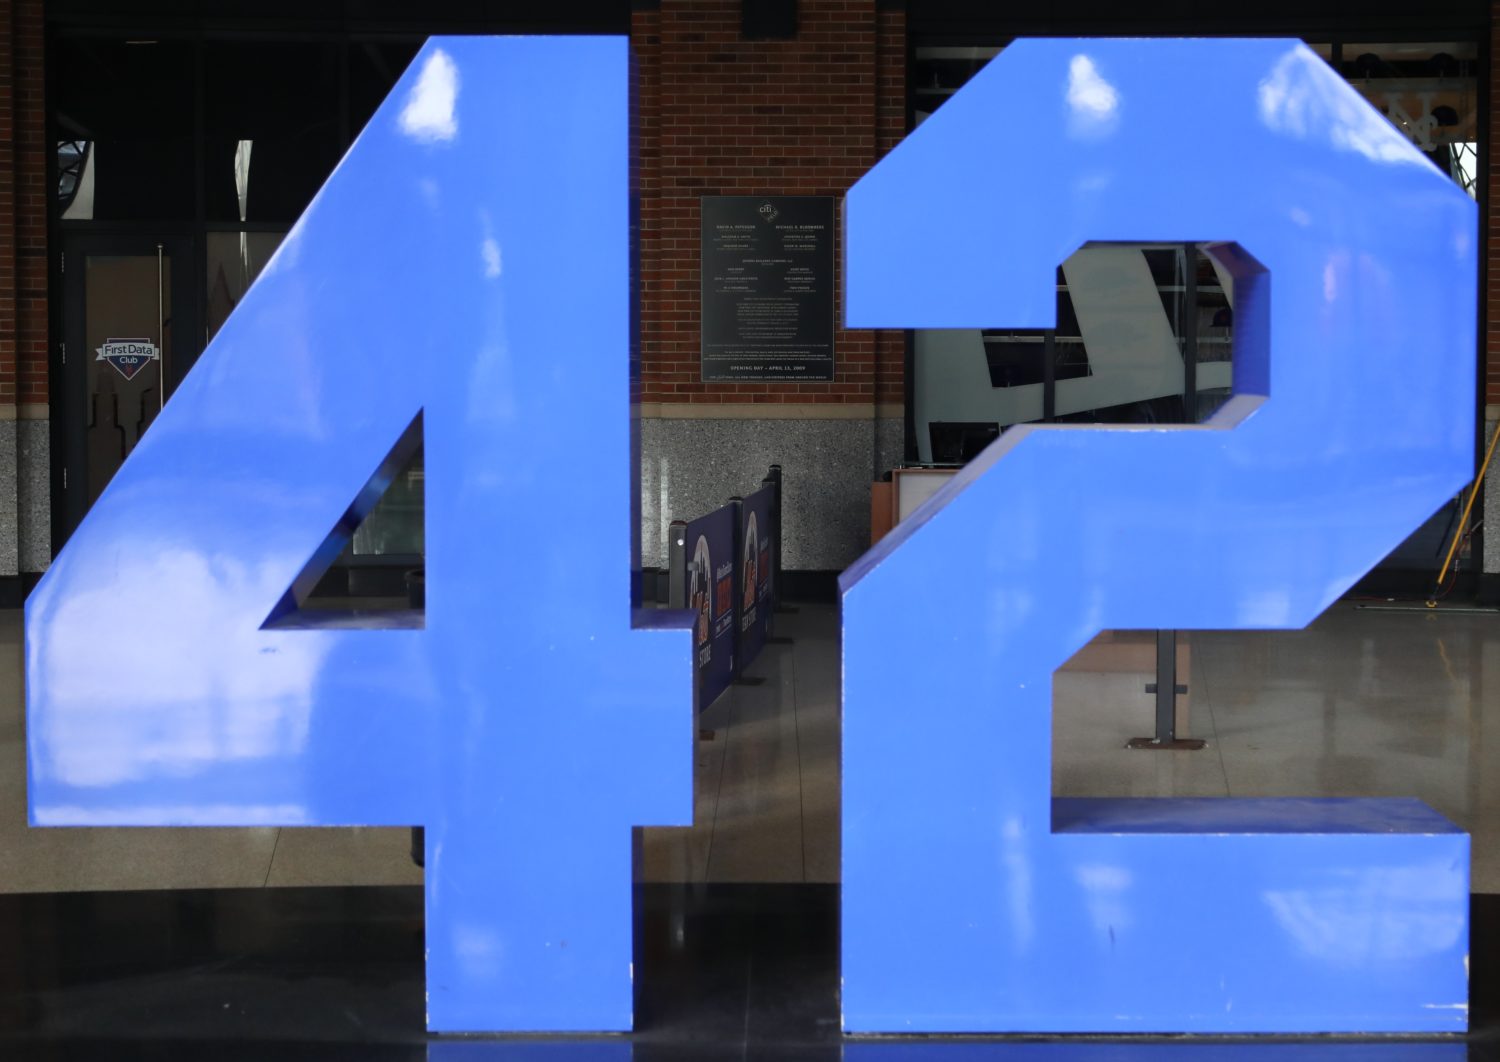 Number 42 Displayed at Citi Field